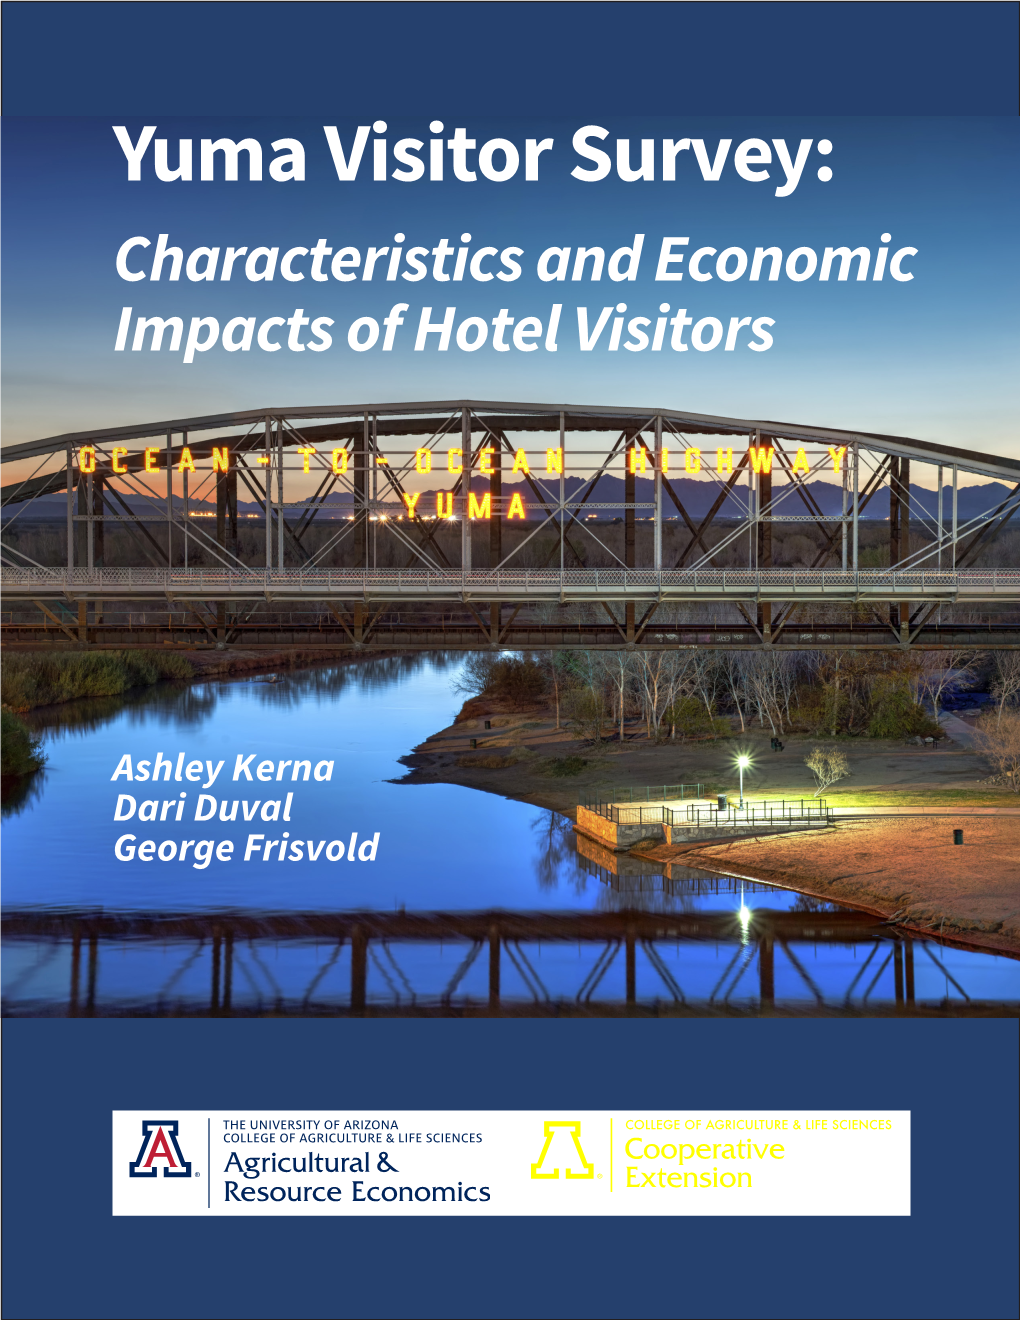 Yuma Visitor Survey: Characteristics and Economic Impacts of Hotel Visitors